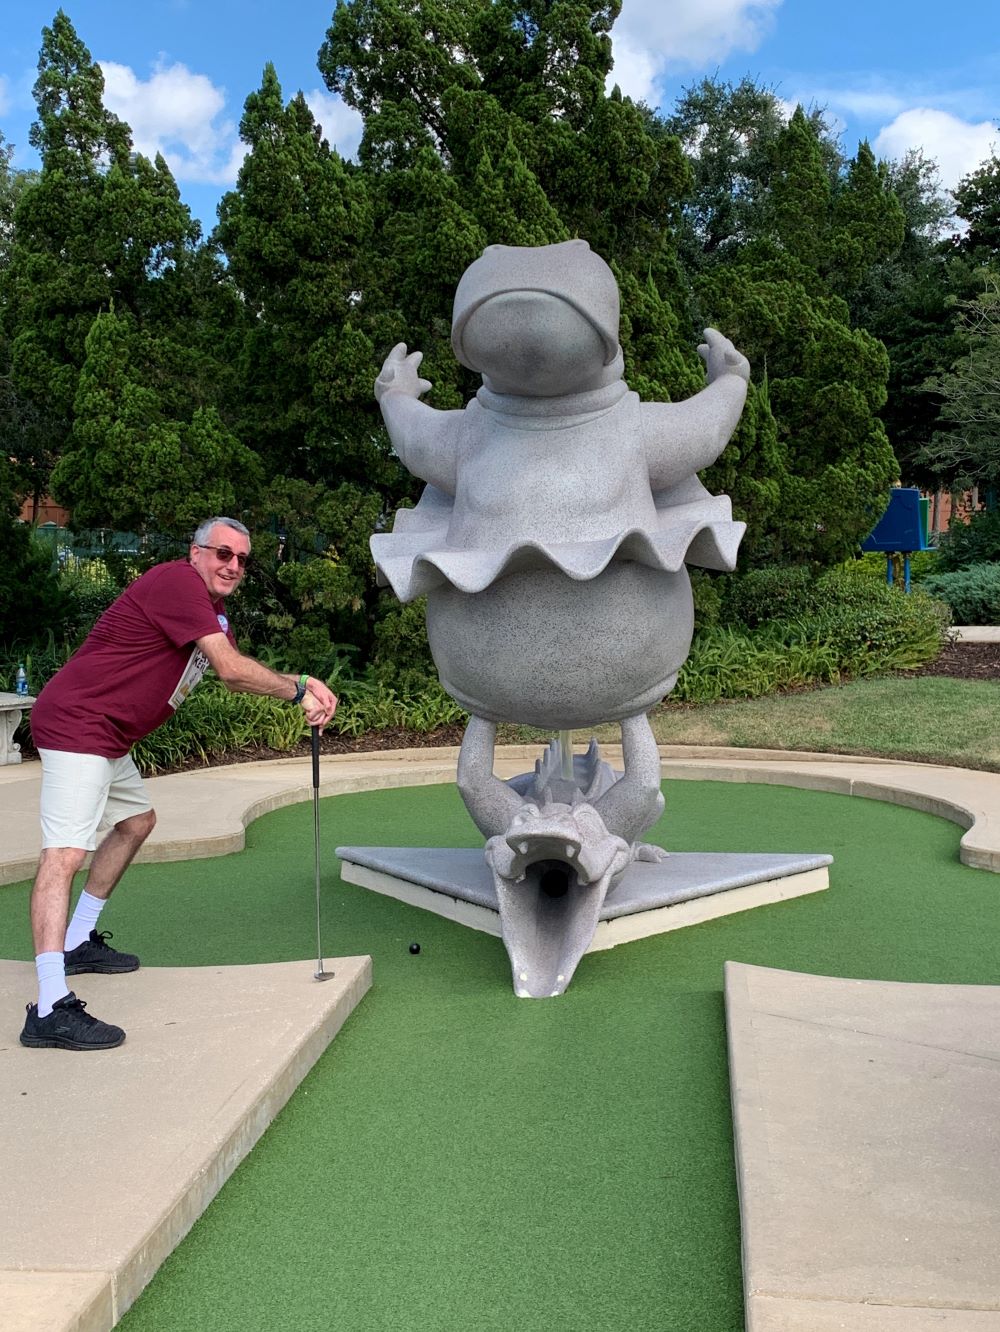 Disney Mini-Golf vs. Universal Mini-Golf